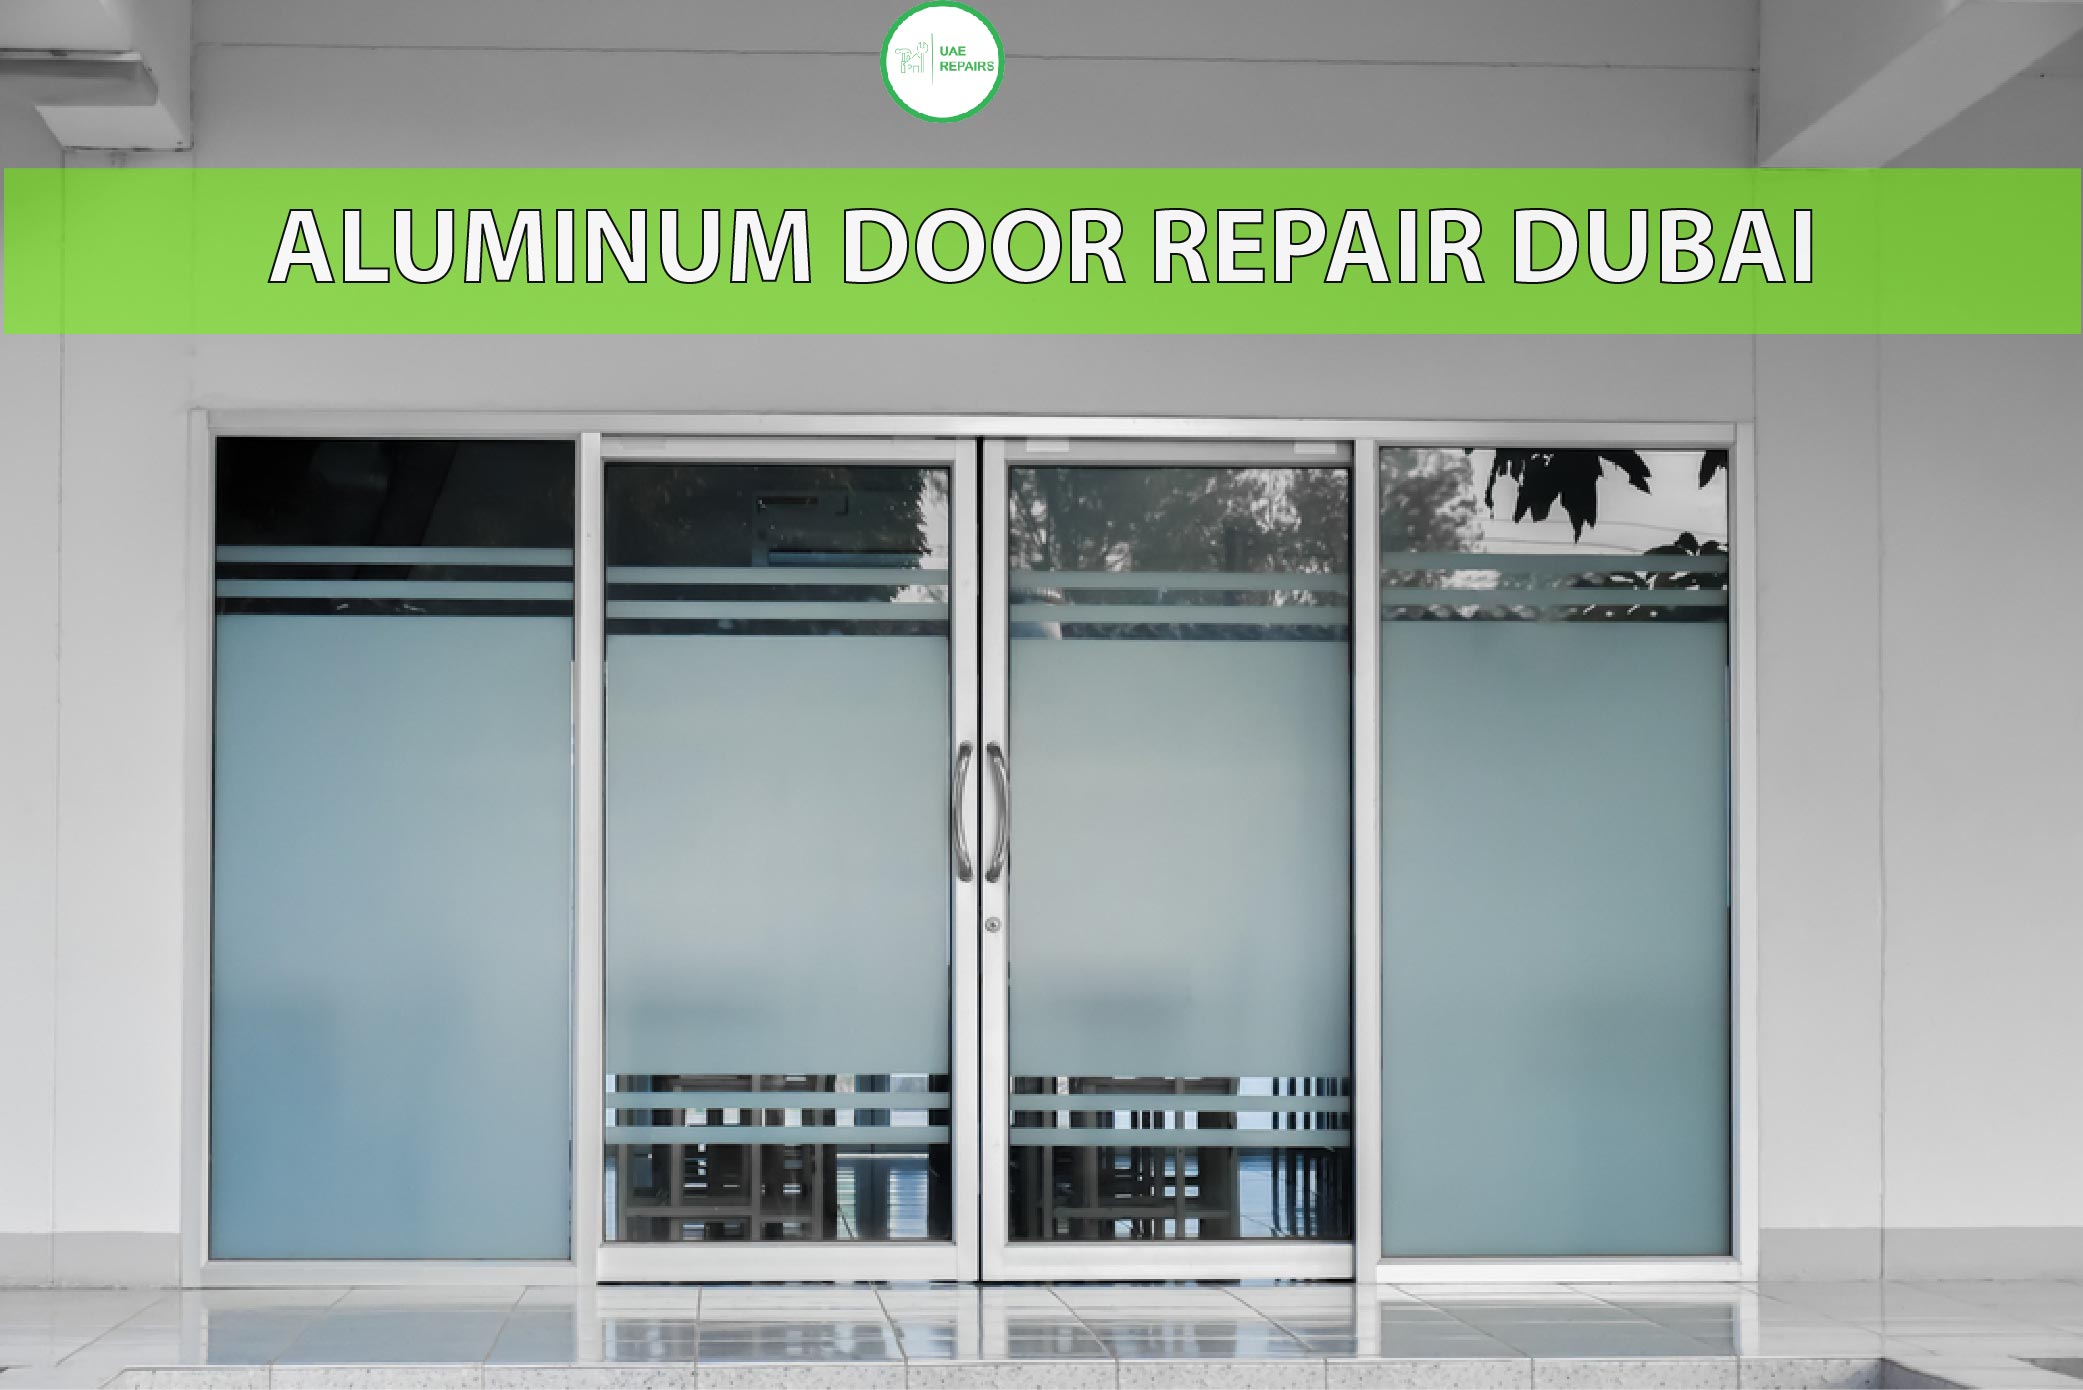 UAE REPAIRS ALUMINUM DOOR REPAIR DUBAI CONTACT US 0588997516